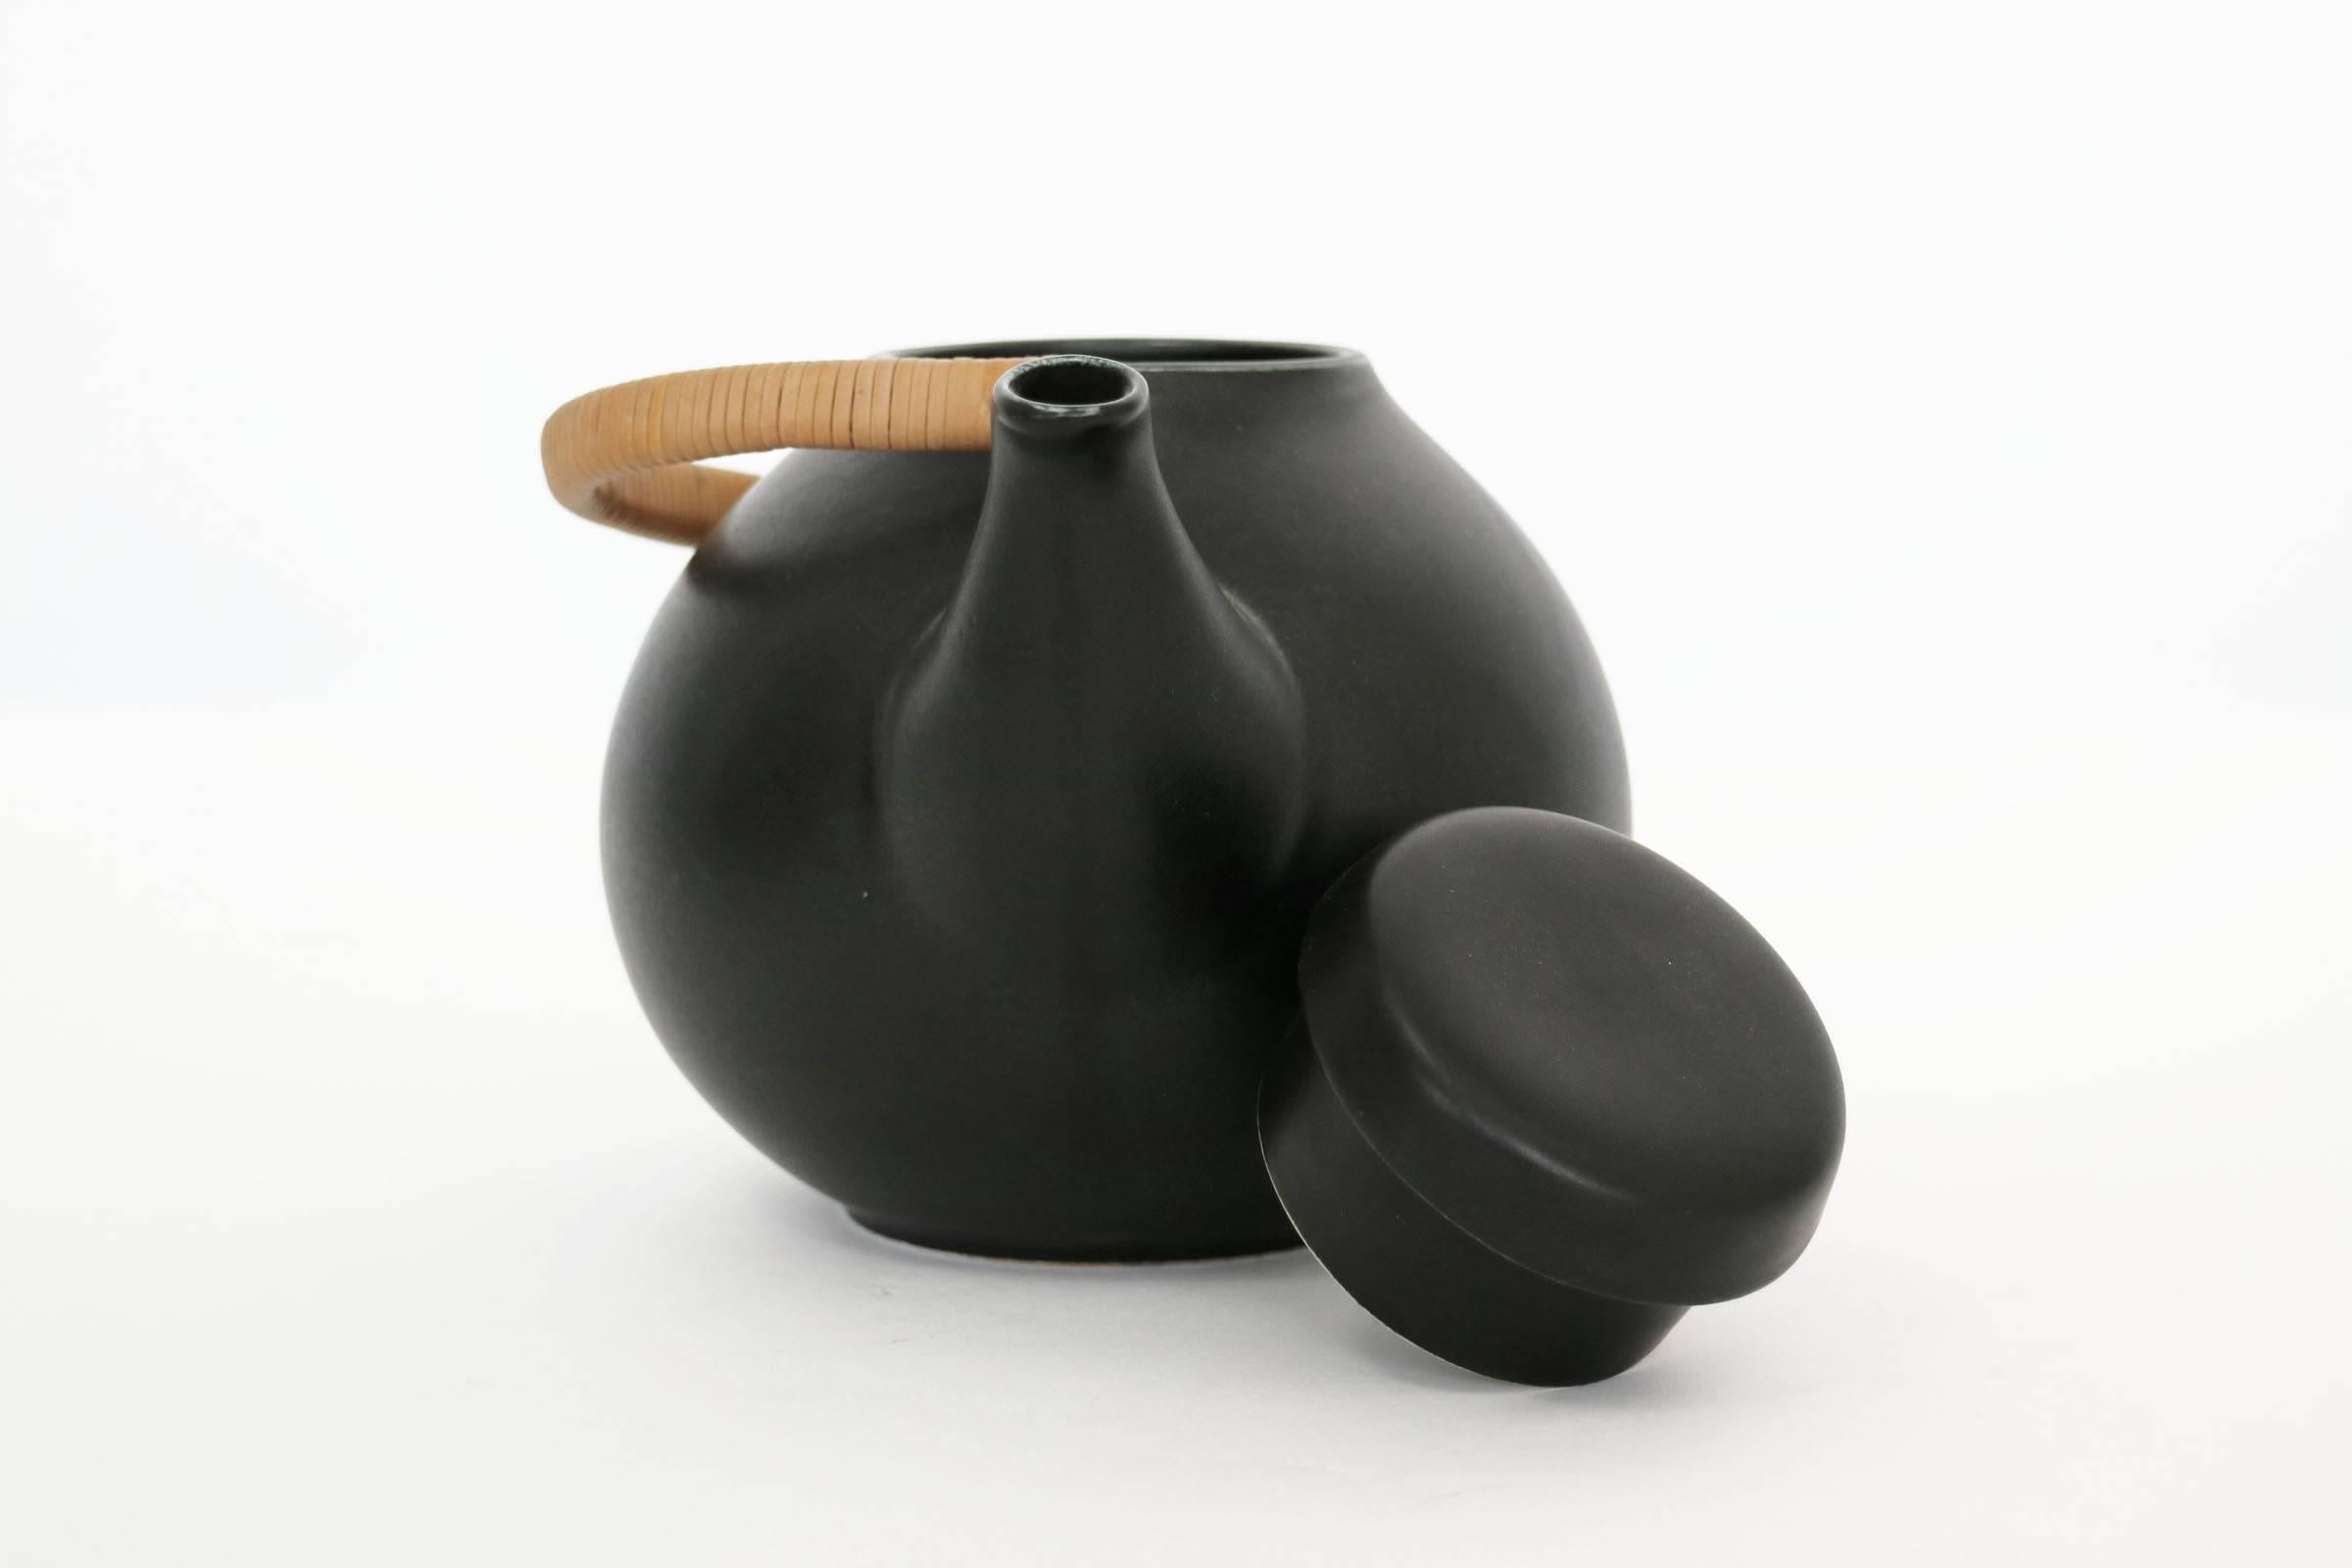 Glazed ceramic tea pot with caned handle. Marked 